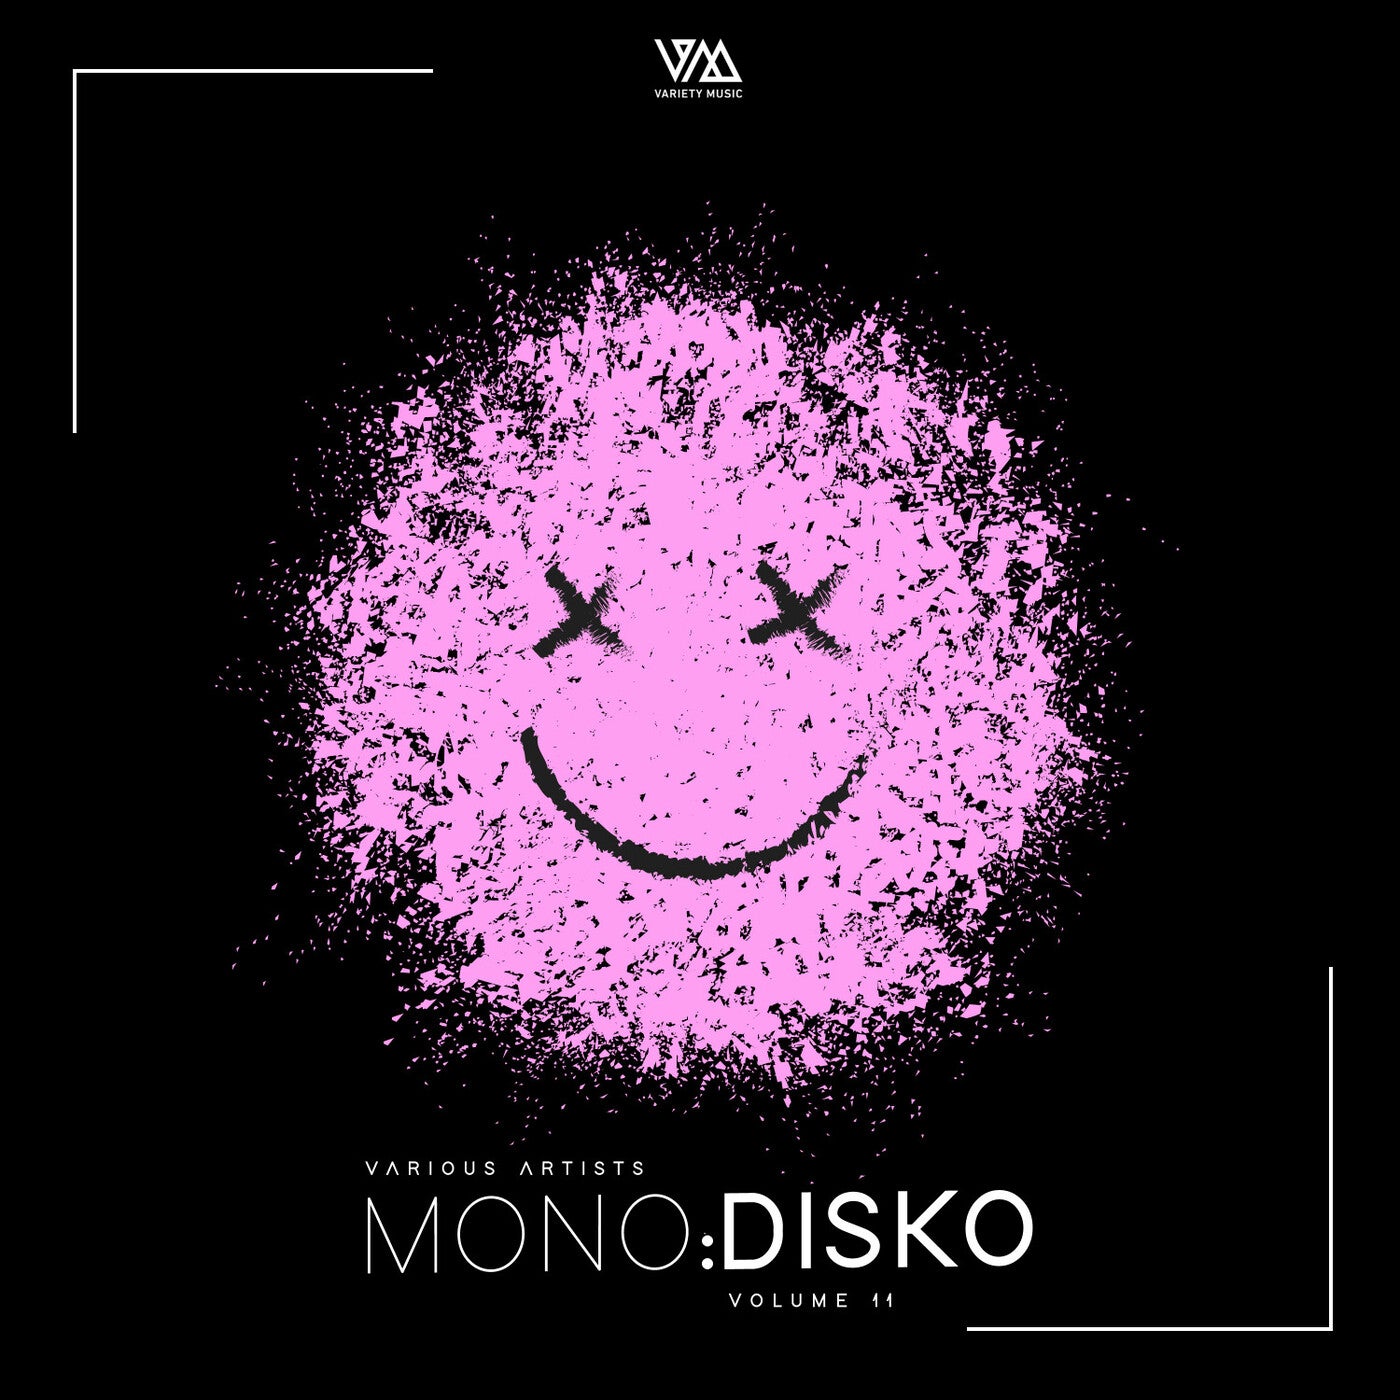 Mono:Disko Vol. 11